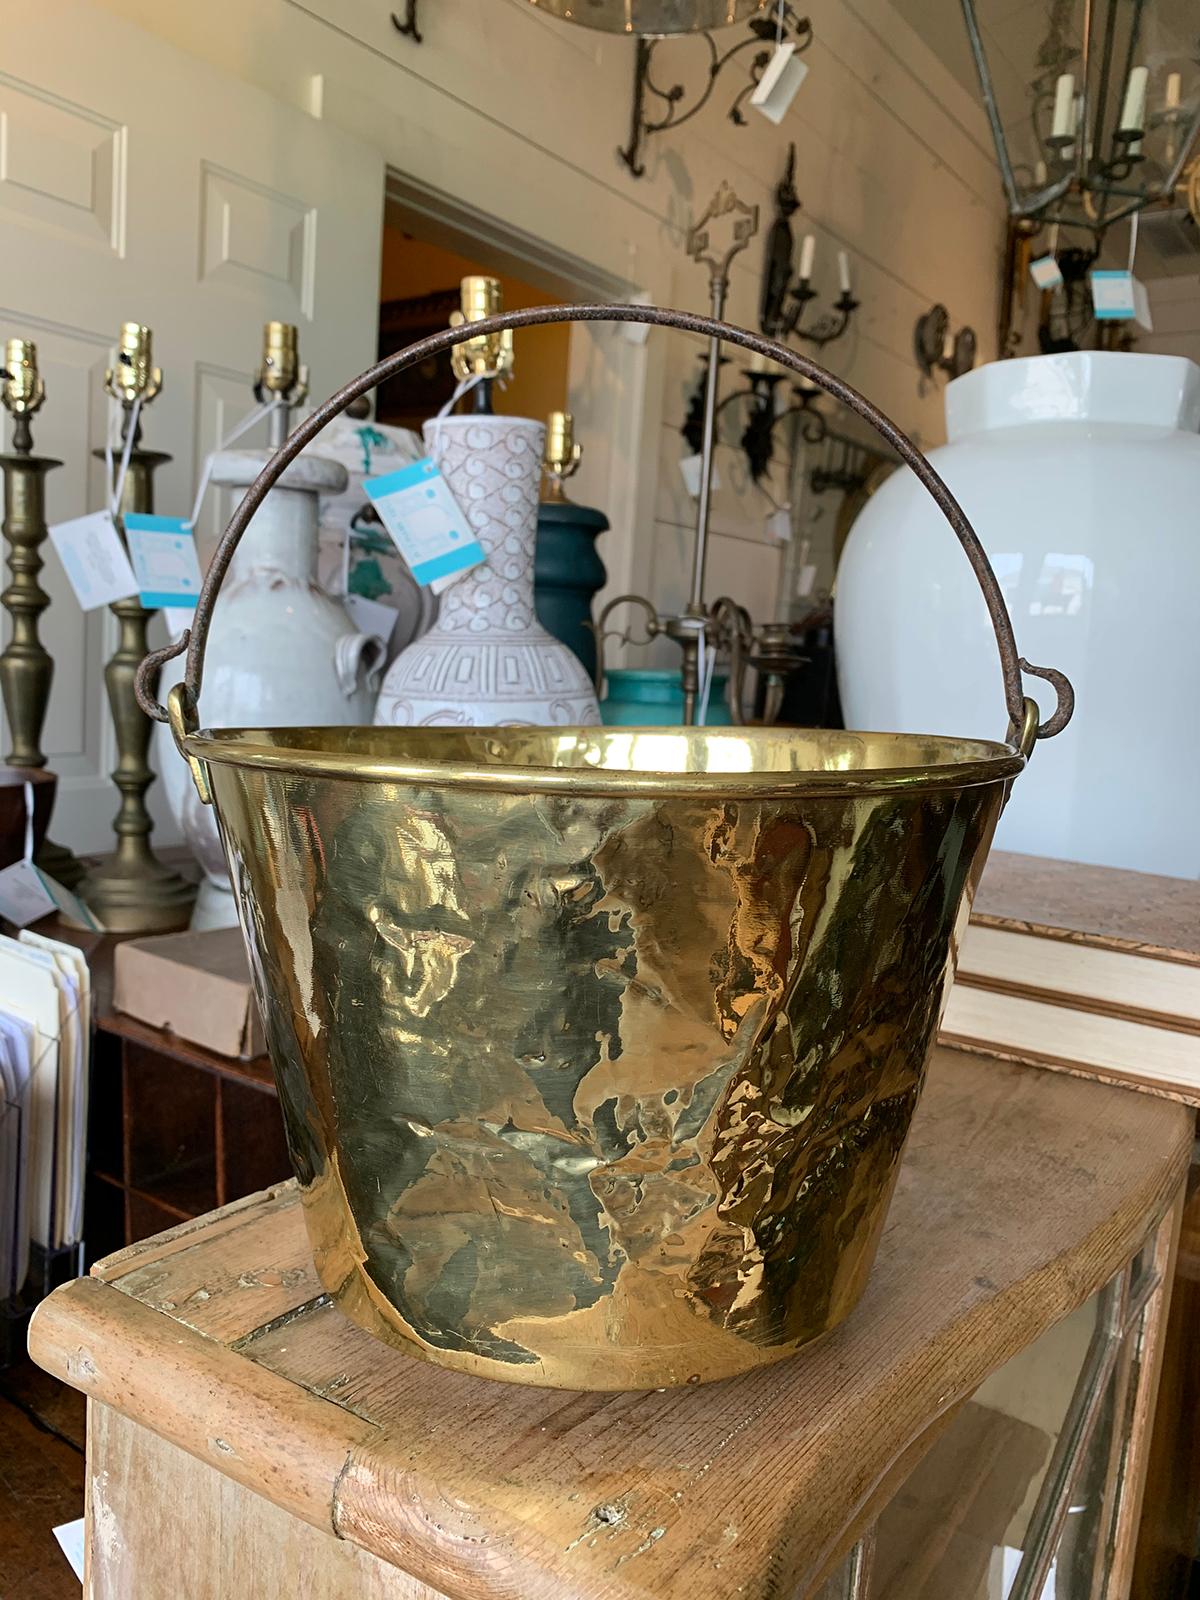 19th-20th century English brass bucket with iron handle
8